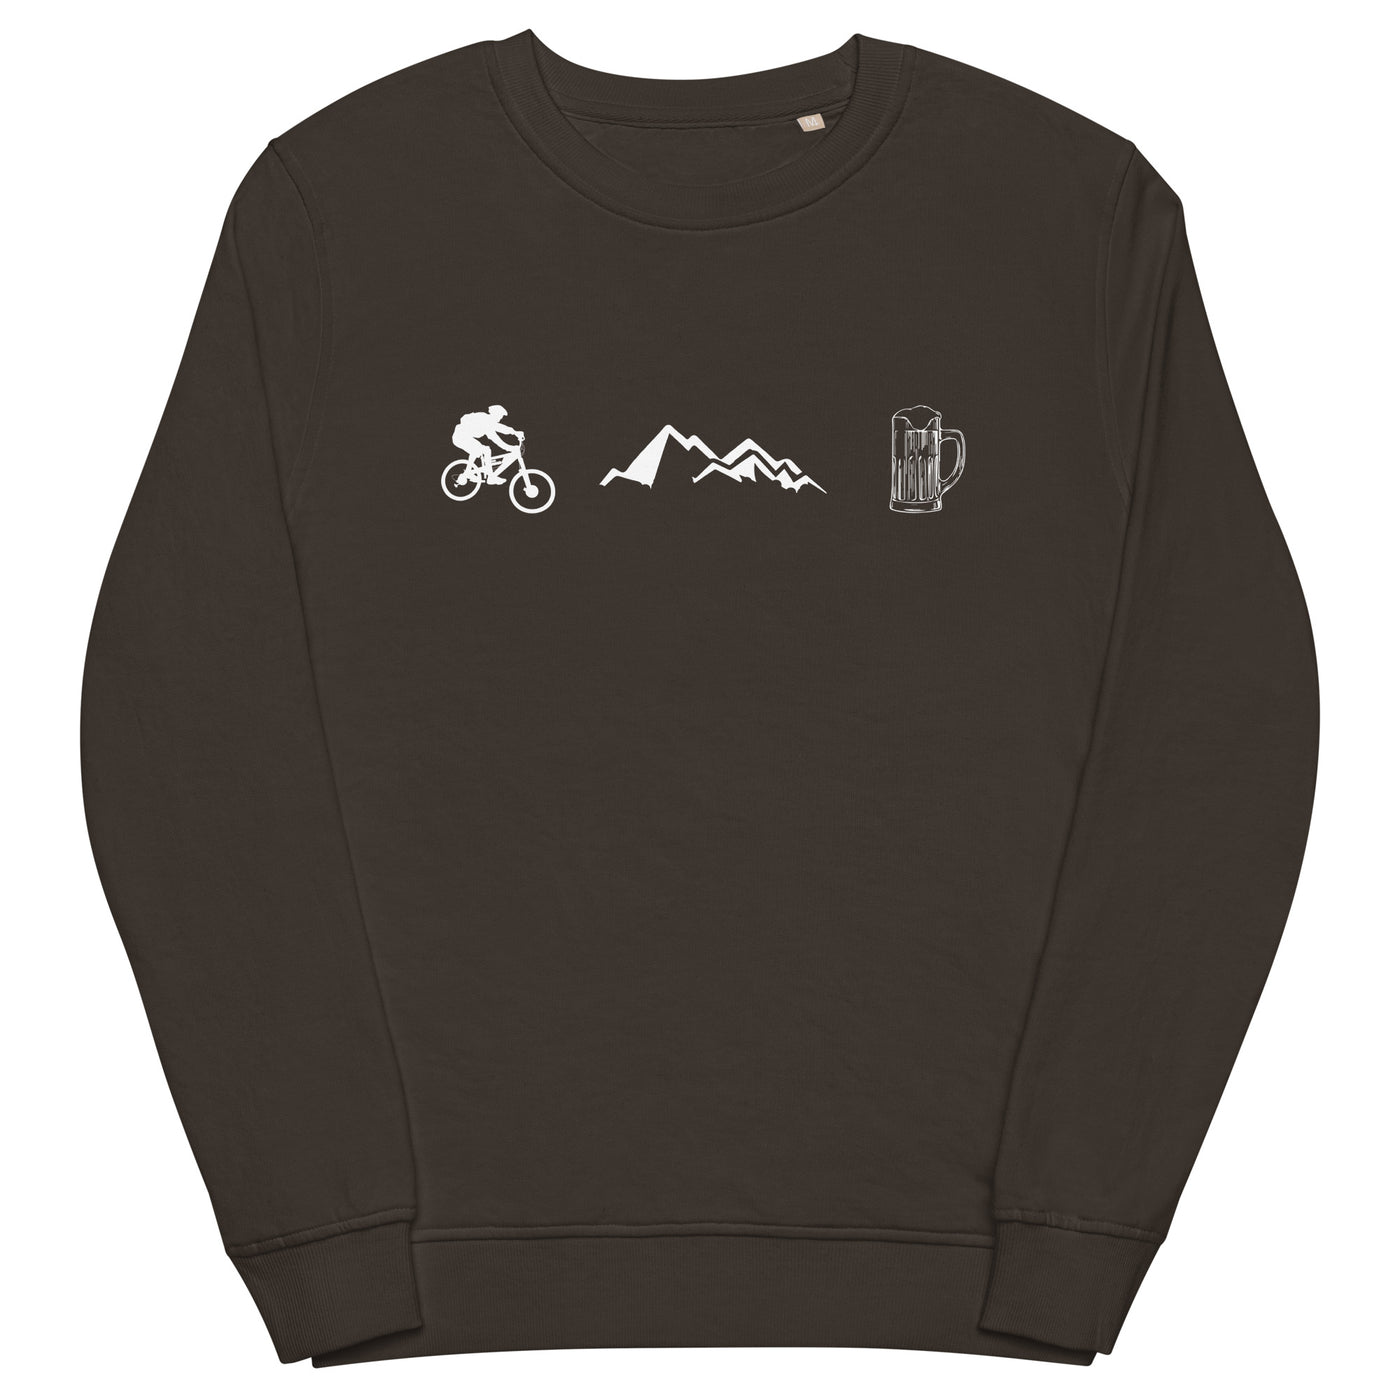 Radfahren, Berge und Bier - Unisex Premium Organic Sweatshirt fahrrad xxx yyy zzz Deep Charcoal Grey